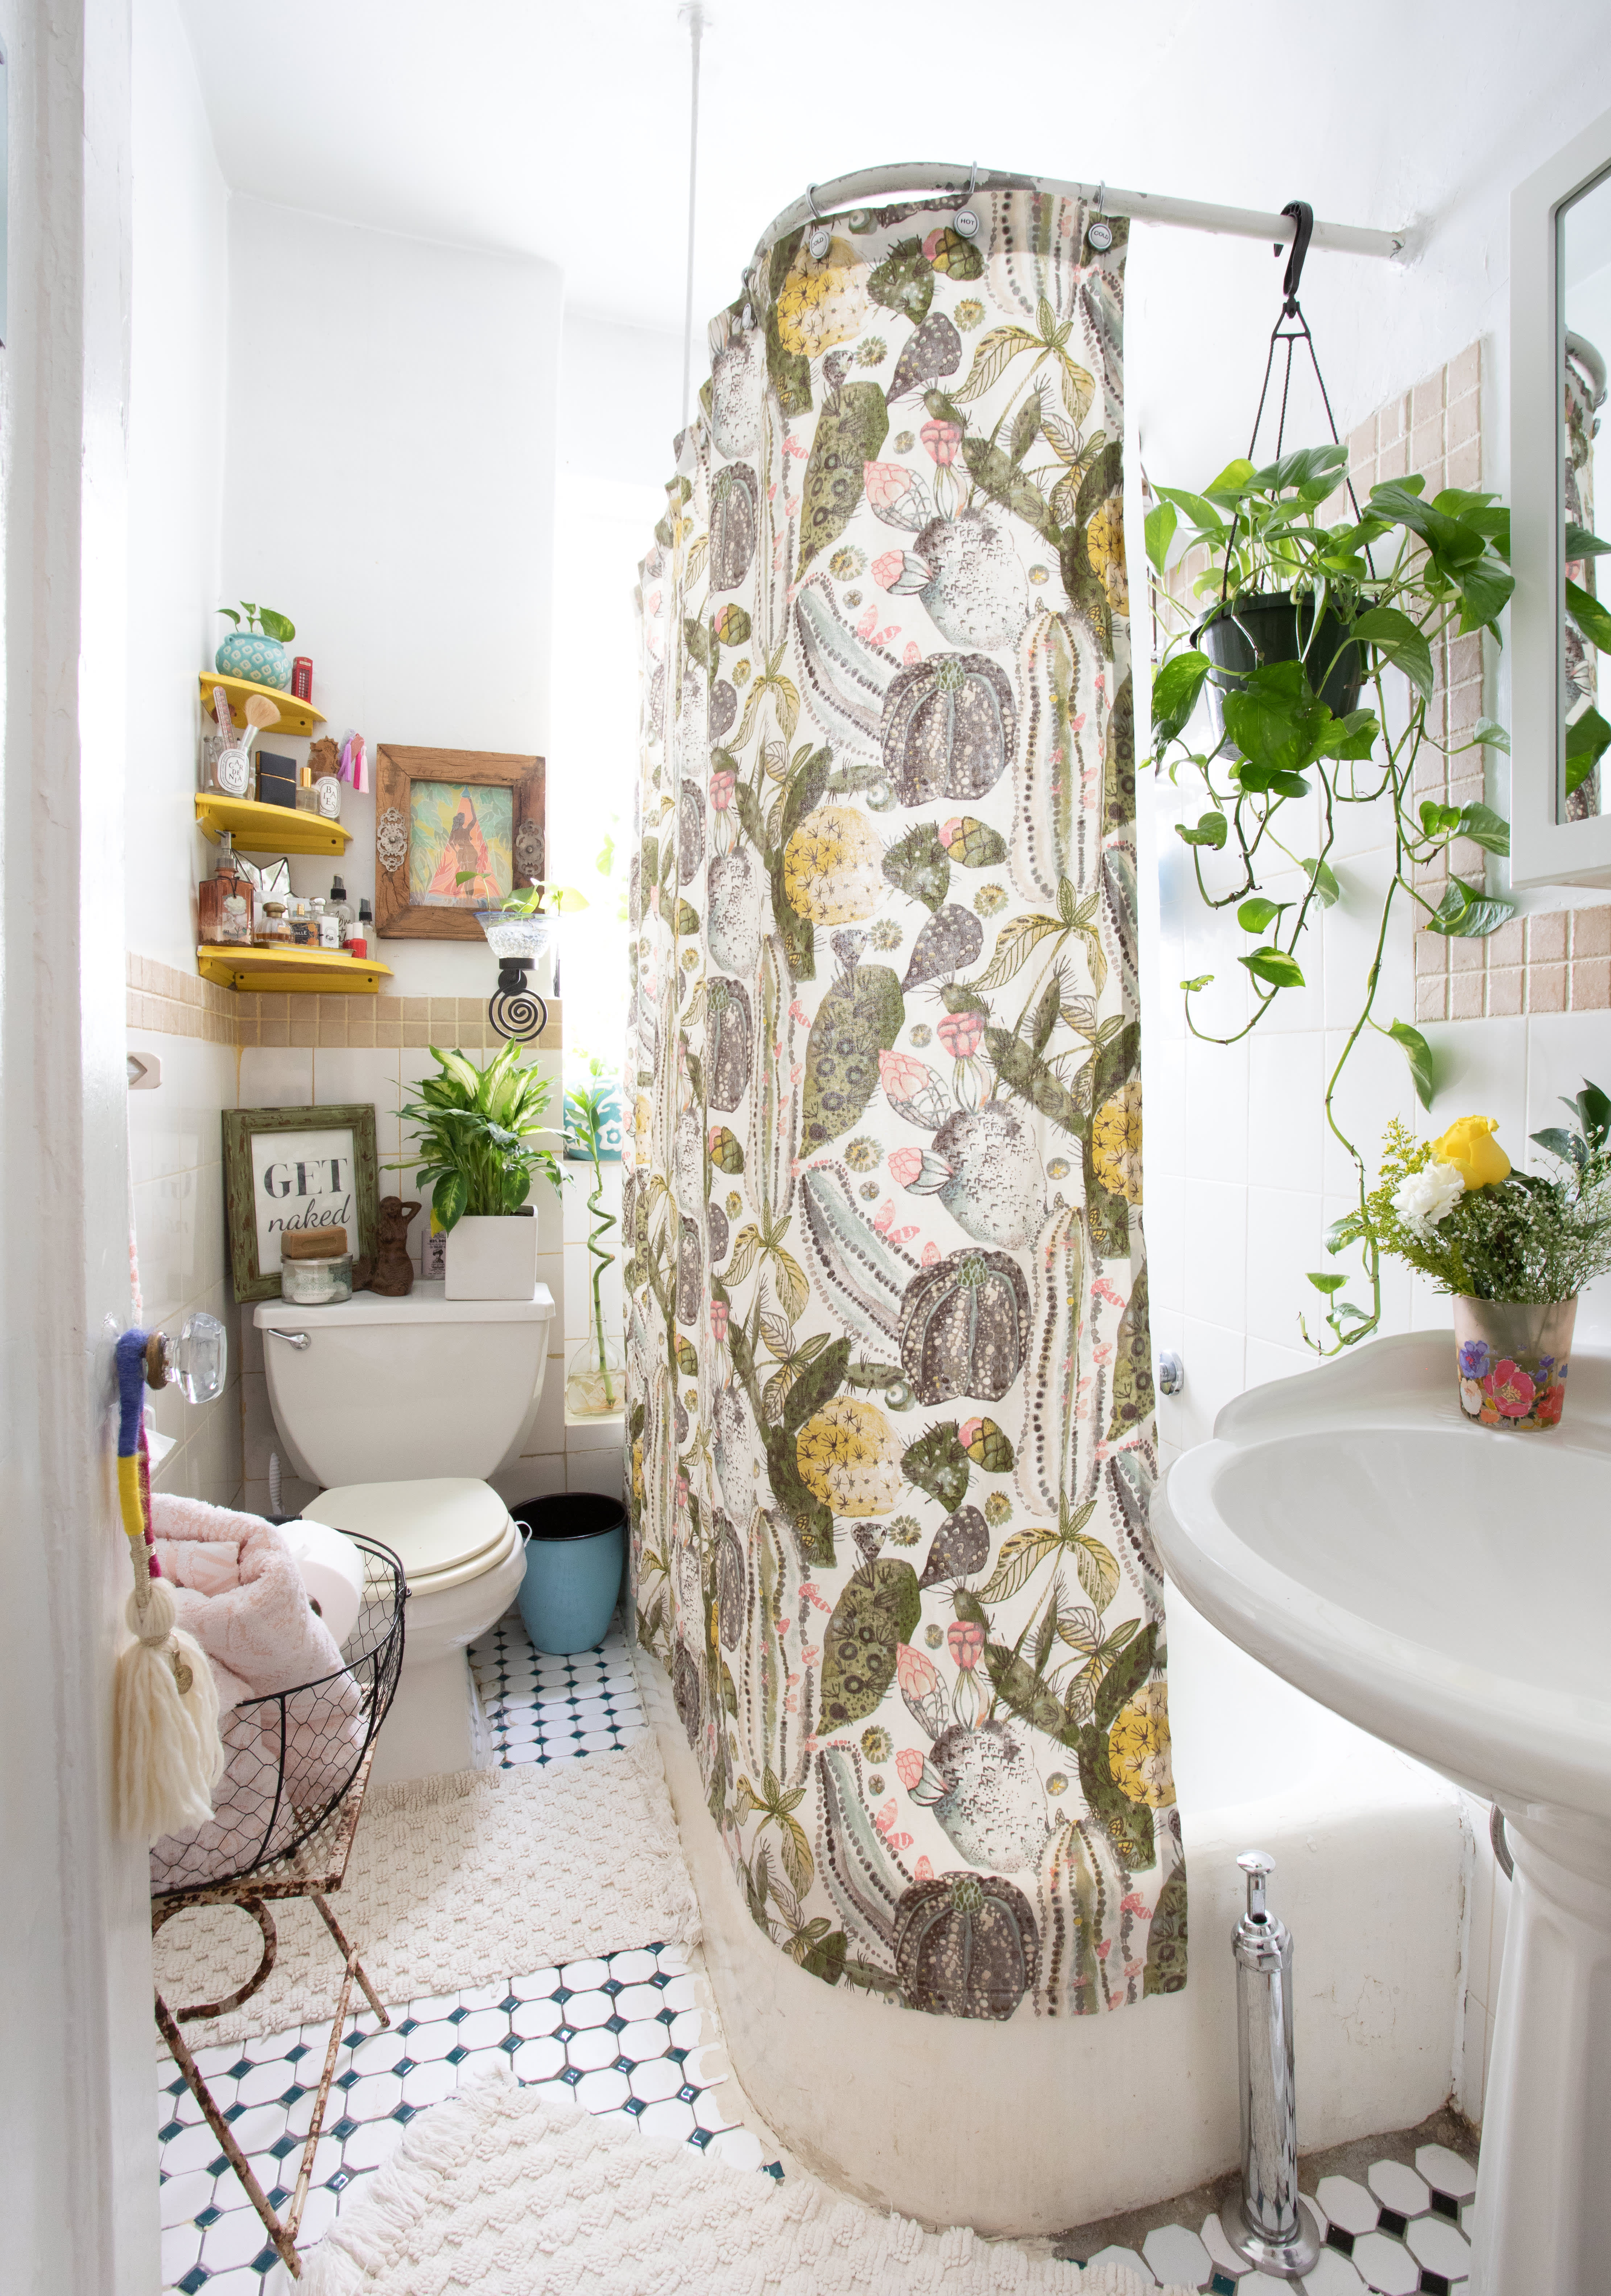 59 Small Bathroom Decor Ideas to Zhuzh Your Tiny Space